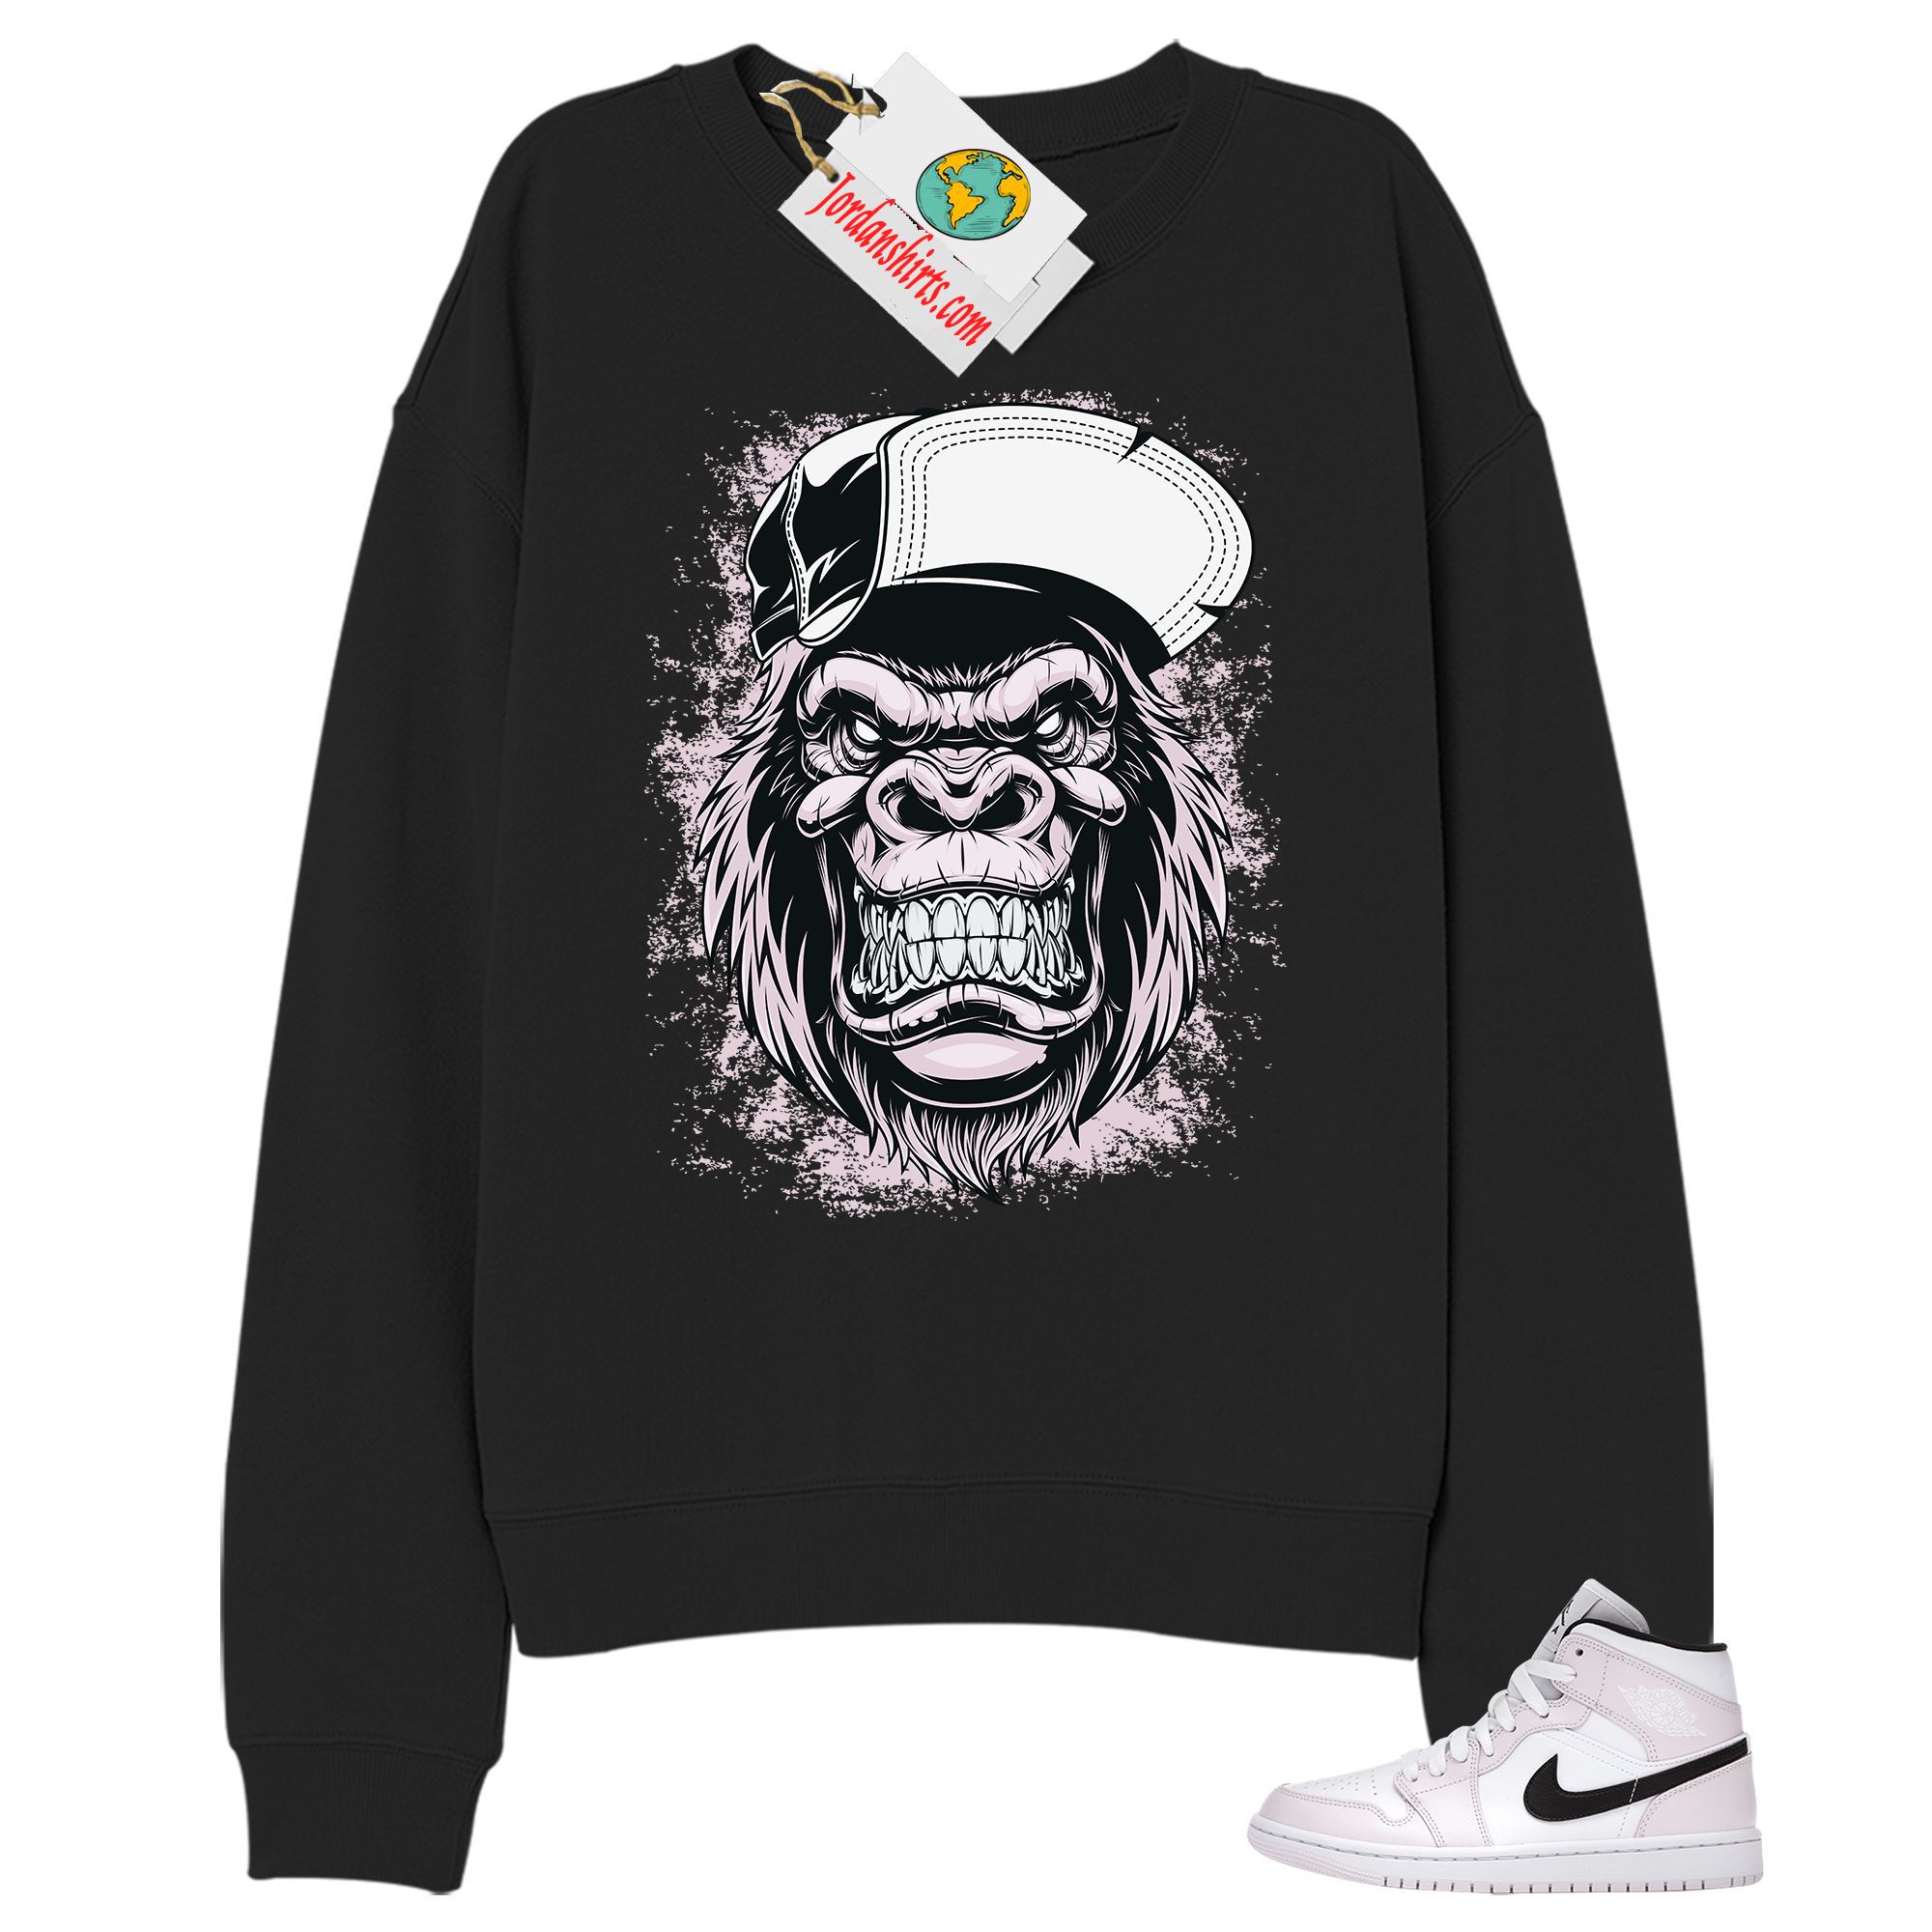 Jordan 1 Sweatshirt, Ferocious Gorilla Black Sweatshirt Air Jordan 1 Barely Rose 1s Full Size Up To 5xl